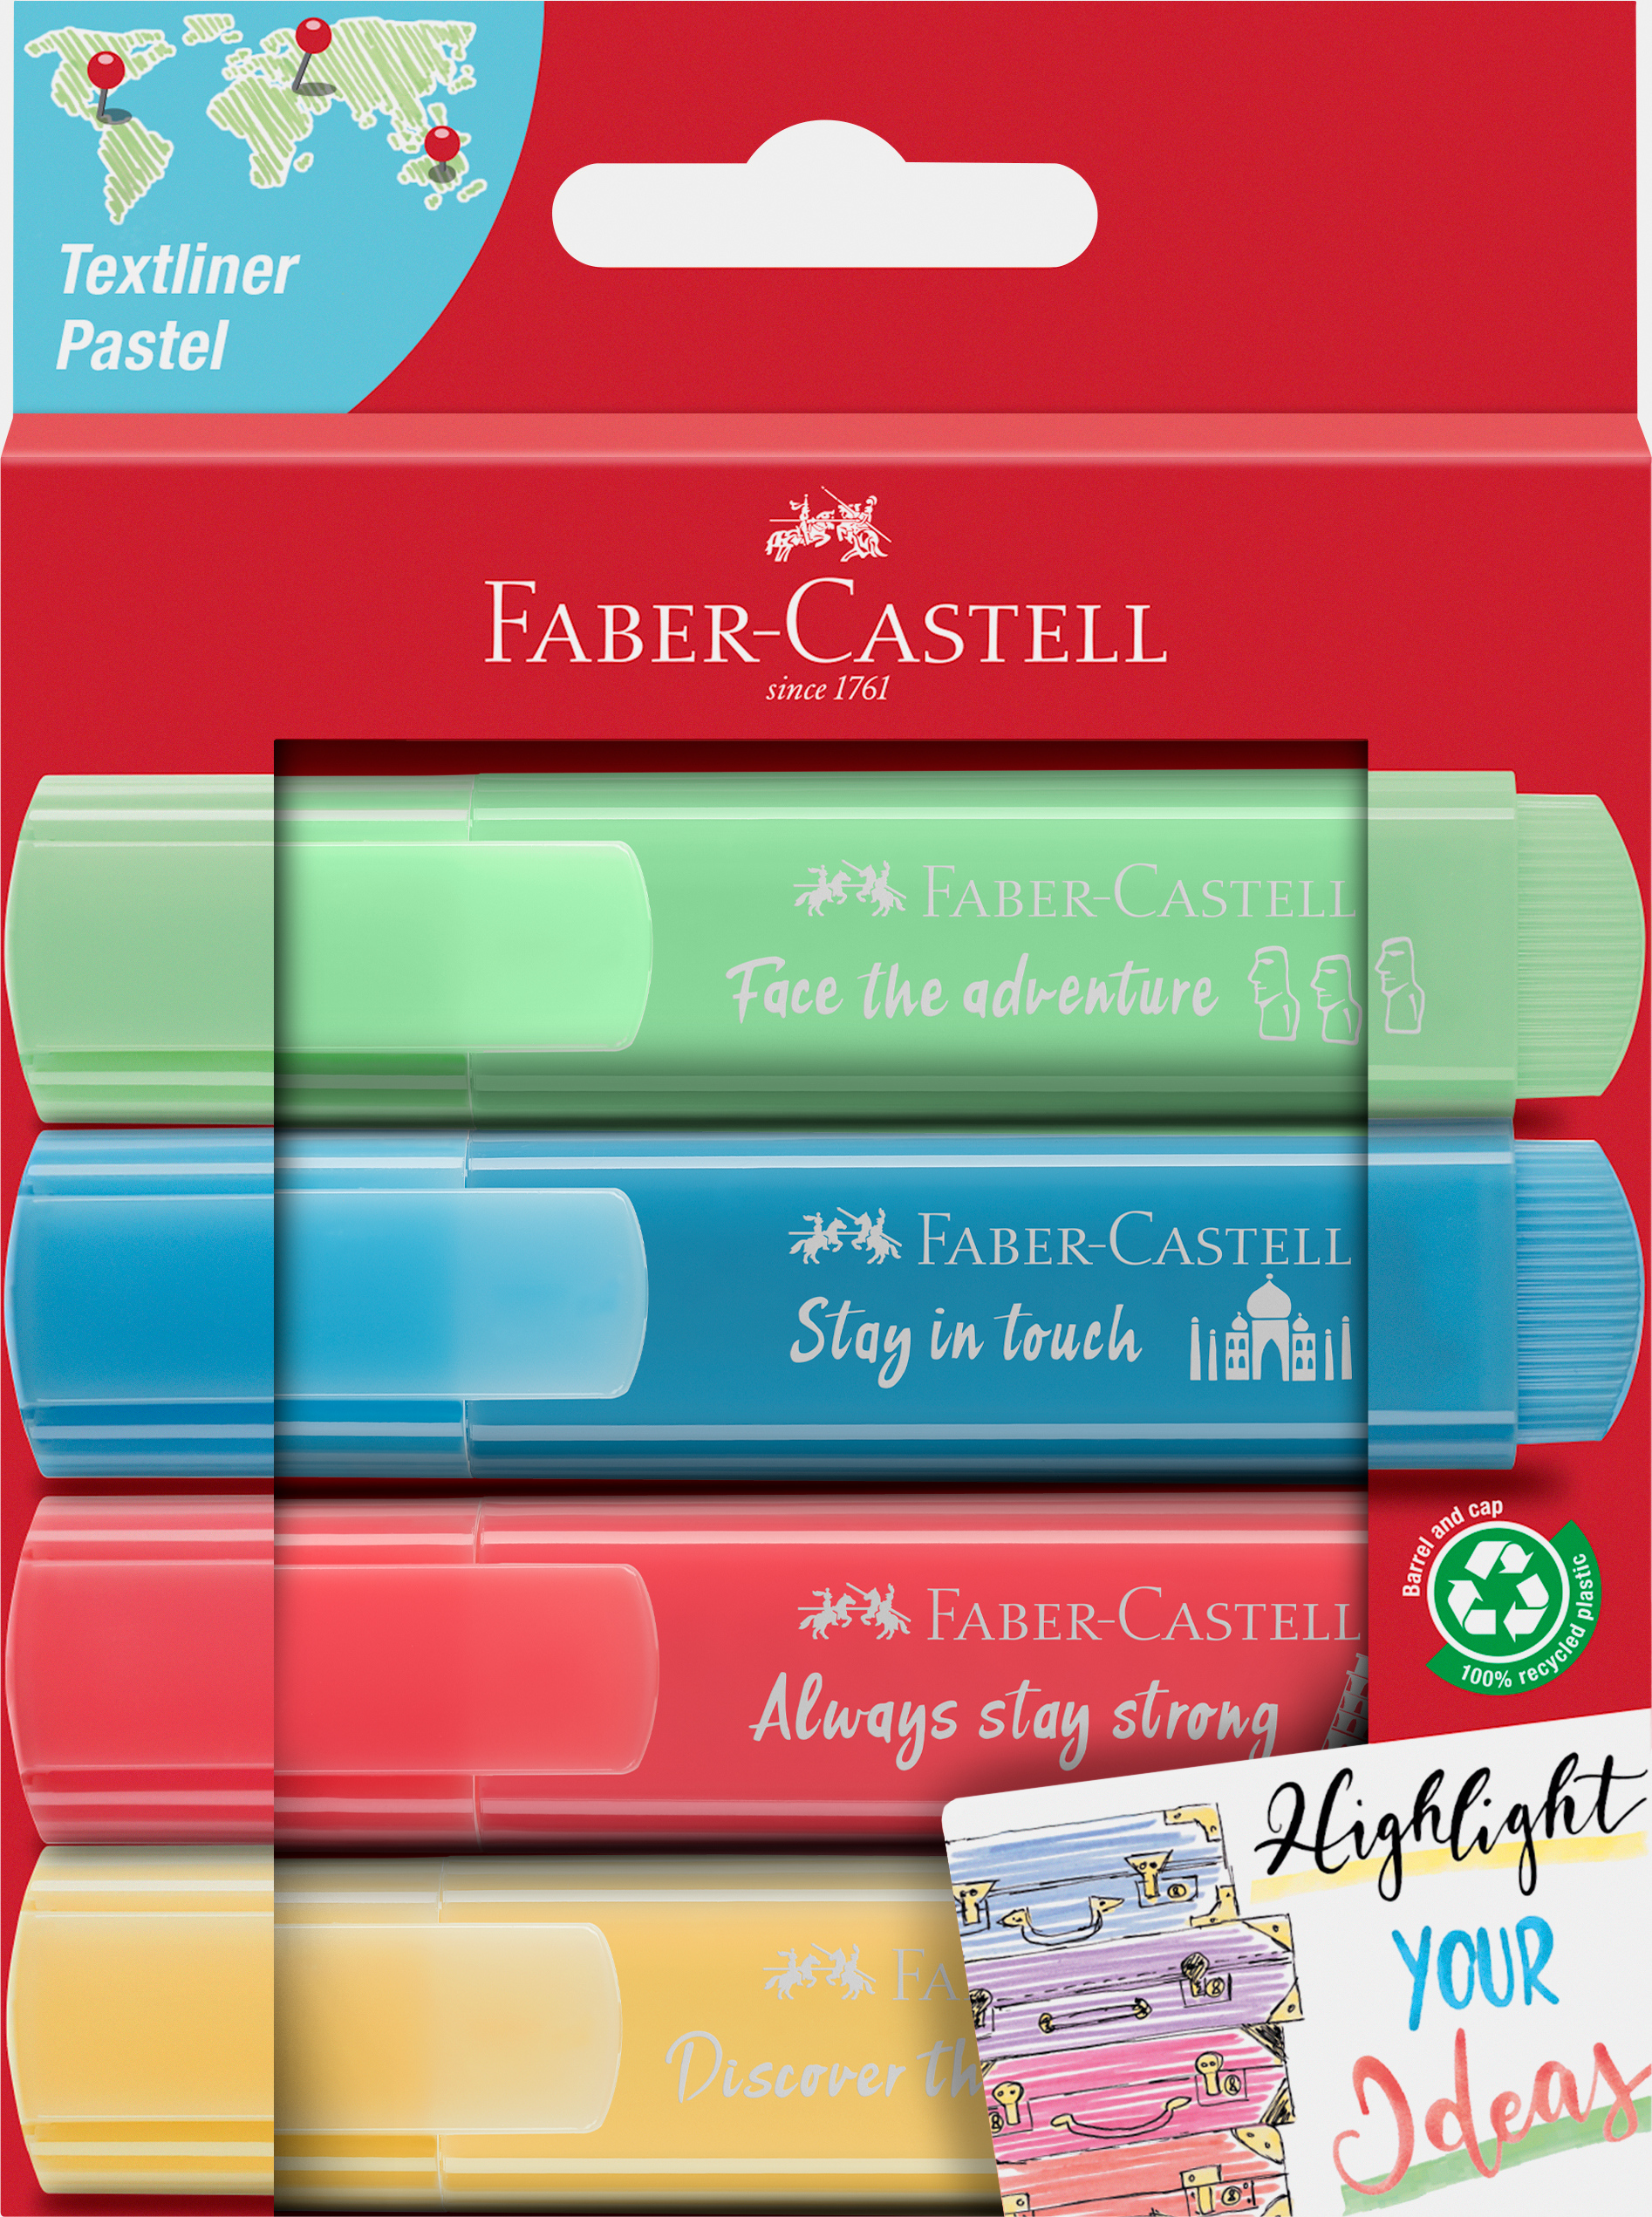 FABER-CASTELL Textmarker 46 Pastell 1.2-5mm 254625 multicolor 4 pcs. multicolor 4 pcs.